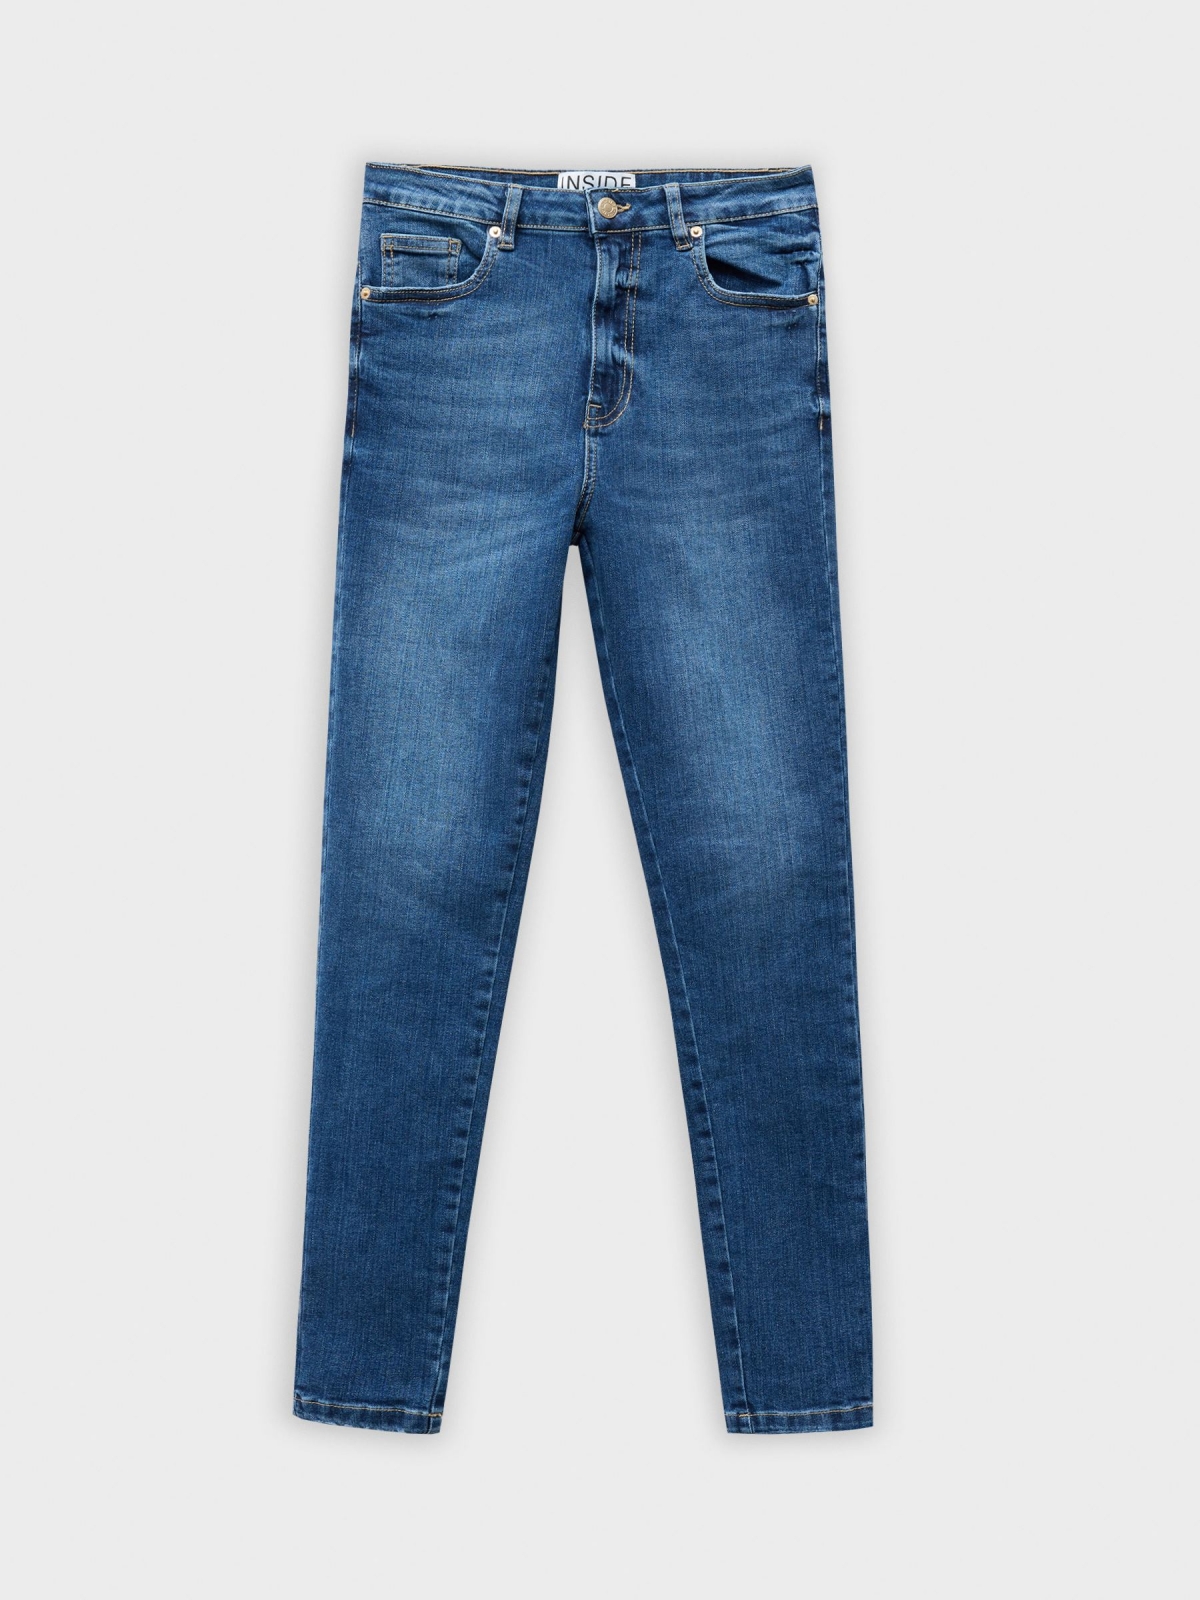  High rise skinny jeans blue